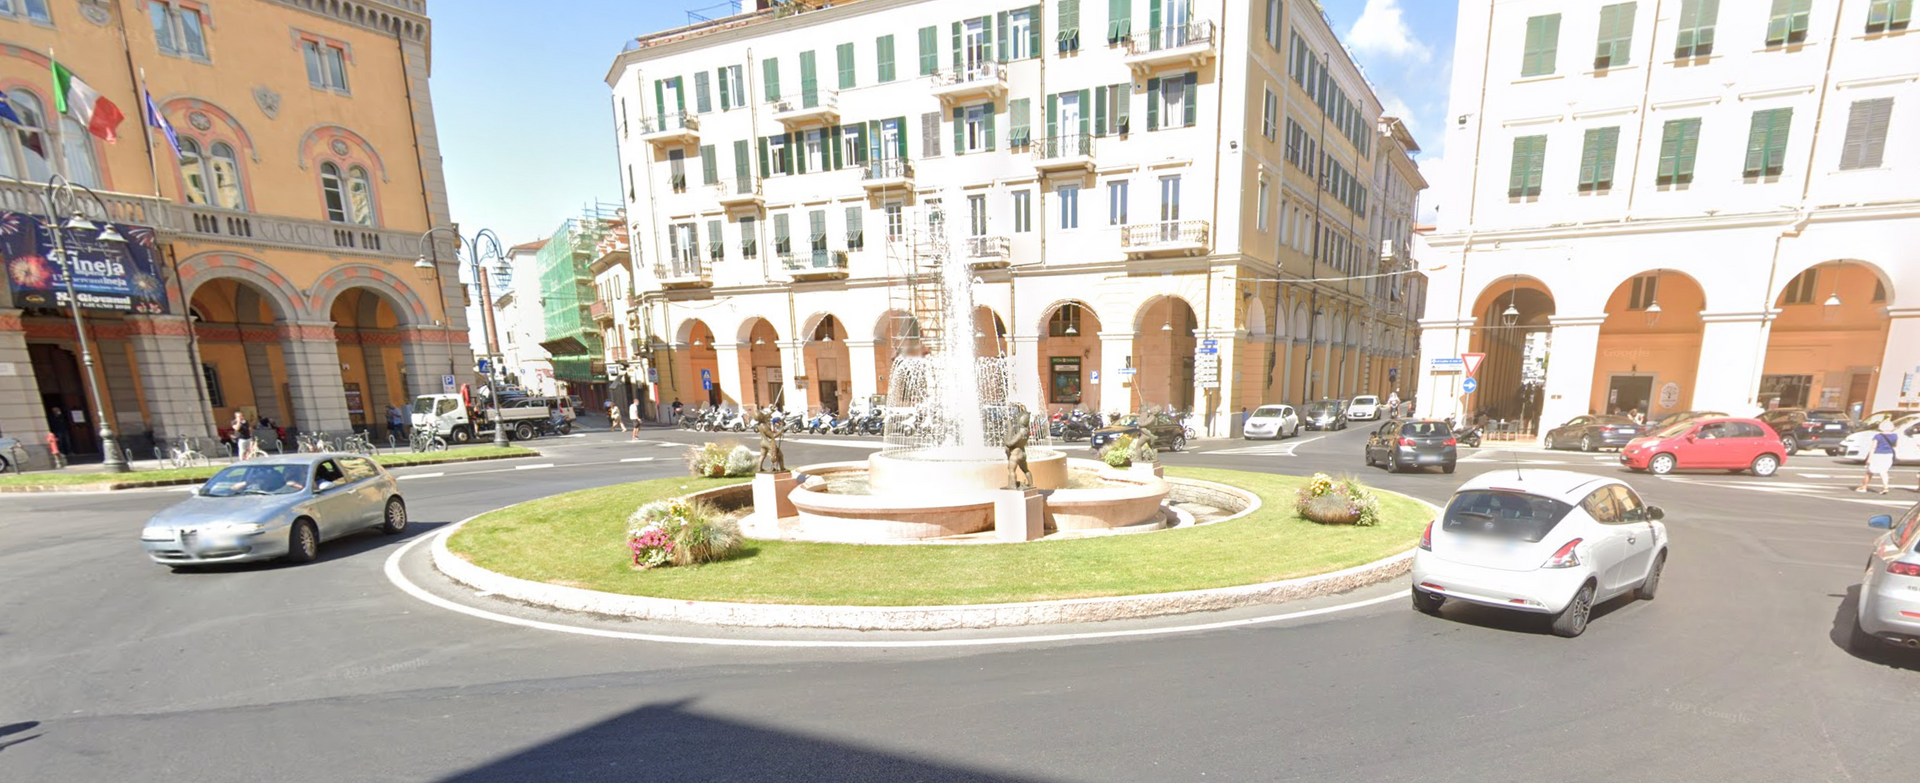 Piazza Dante by Google Earth